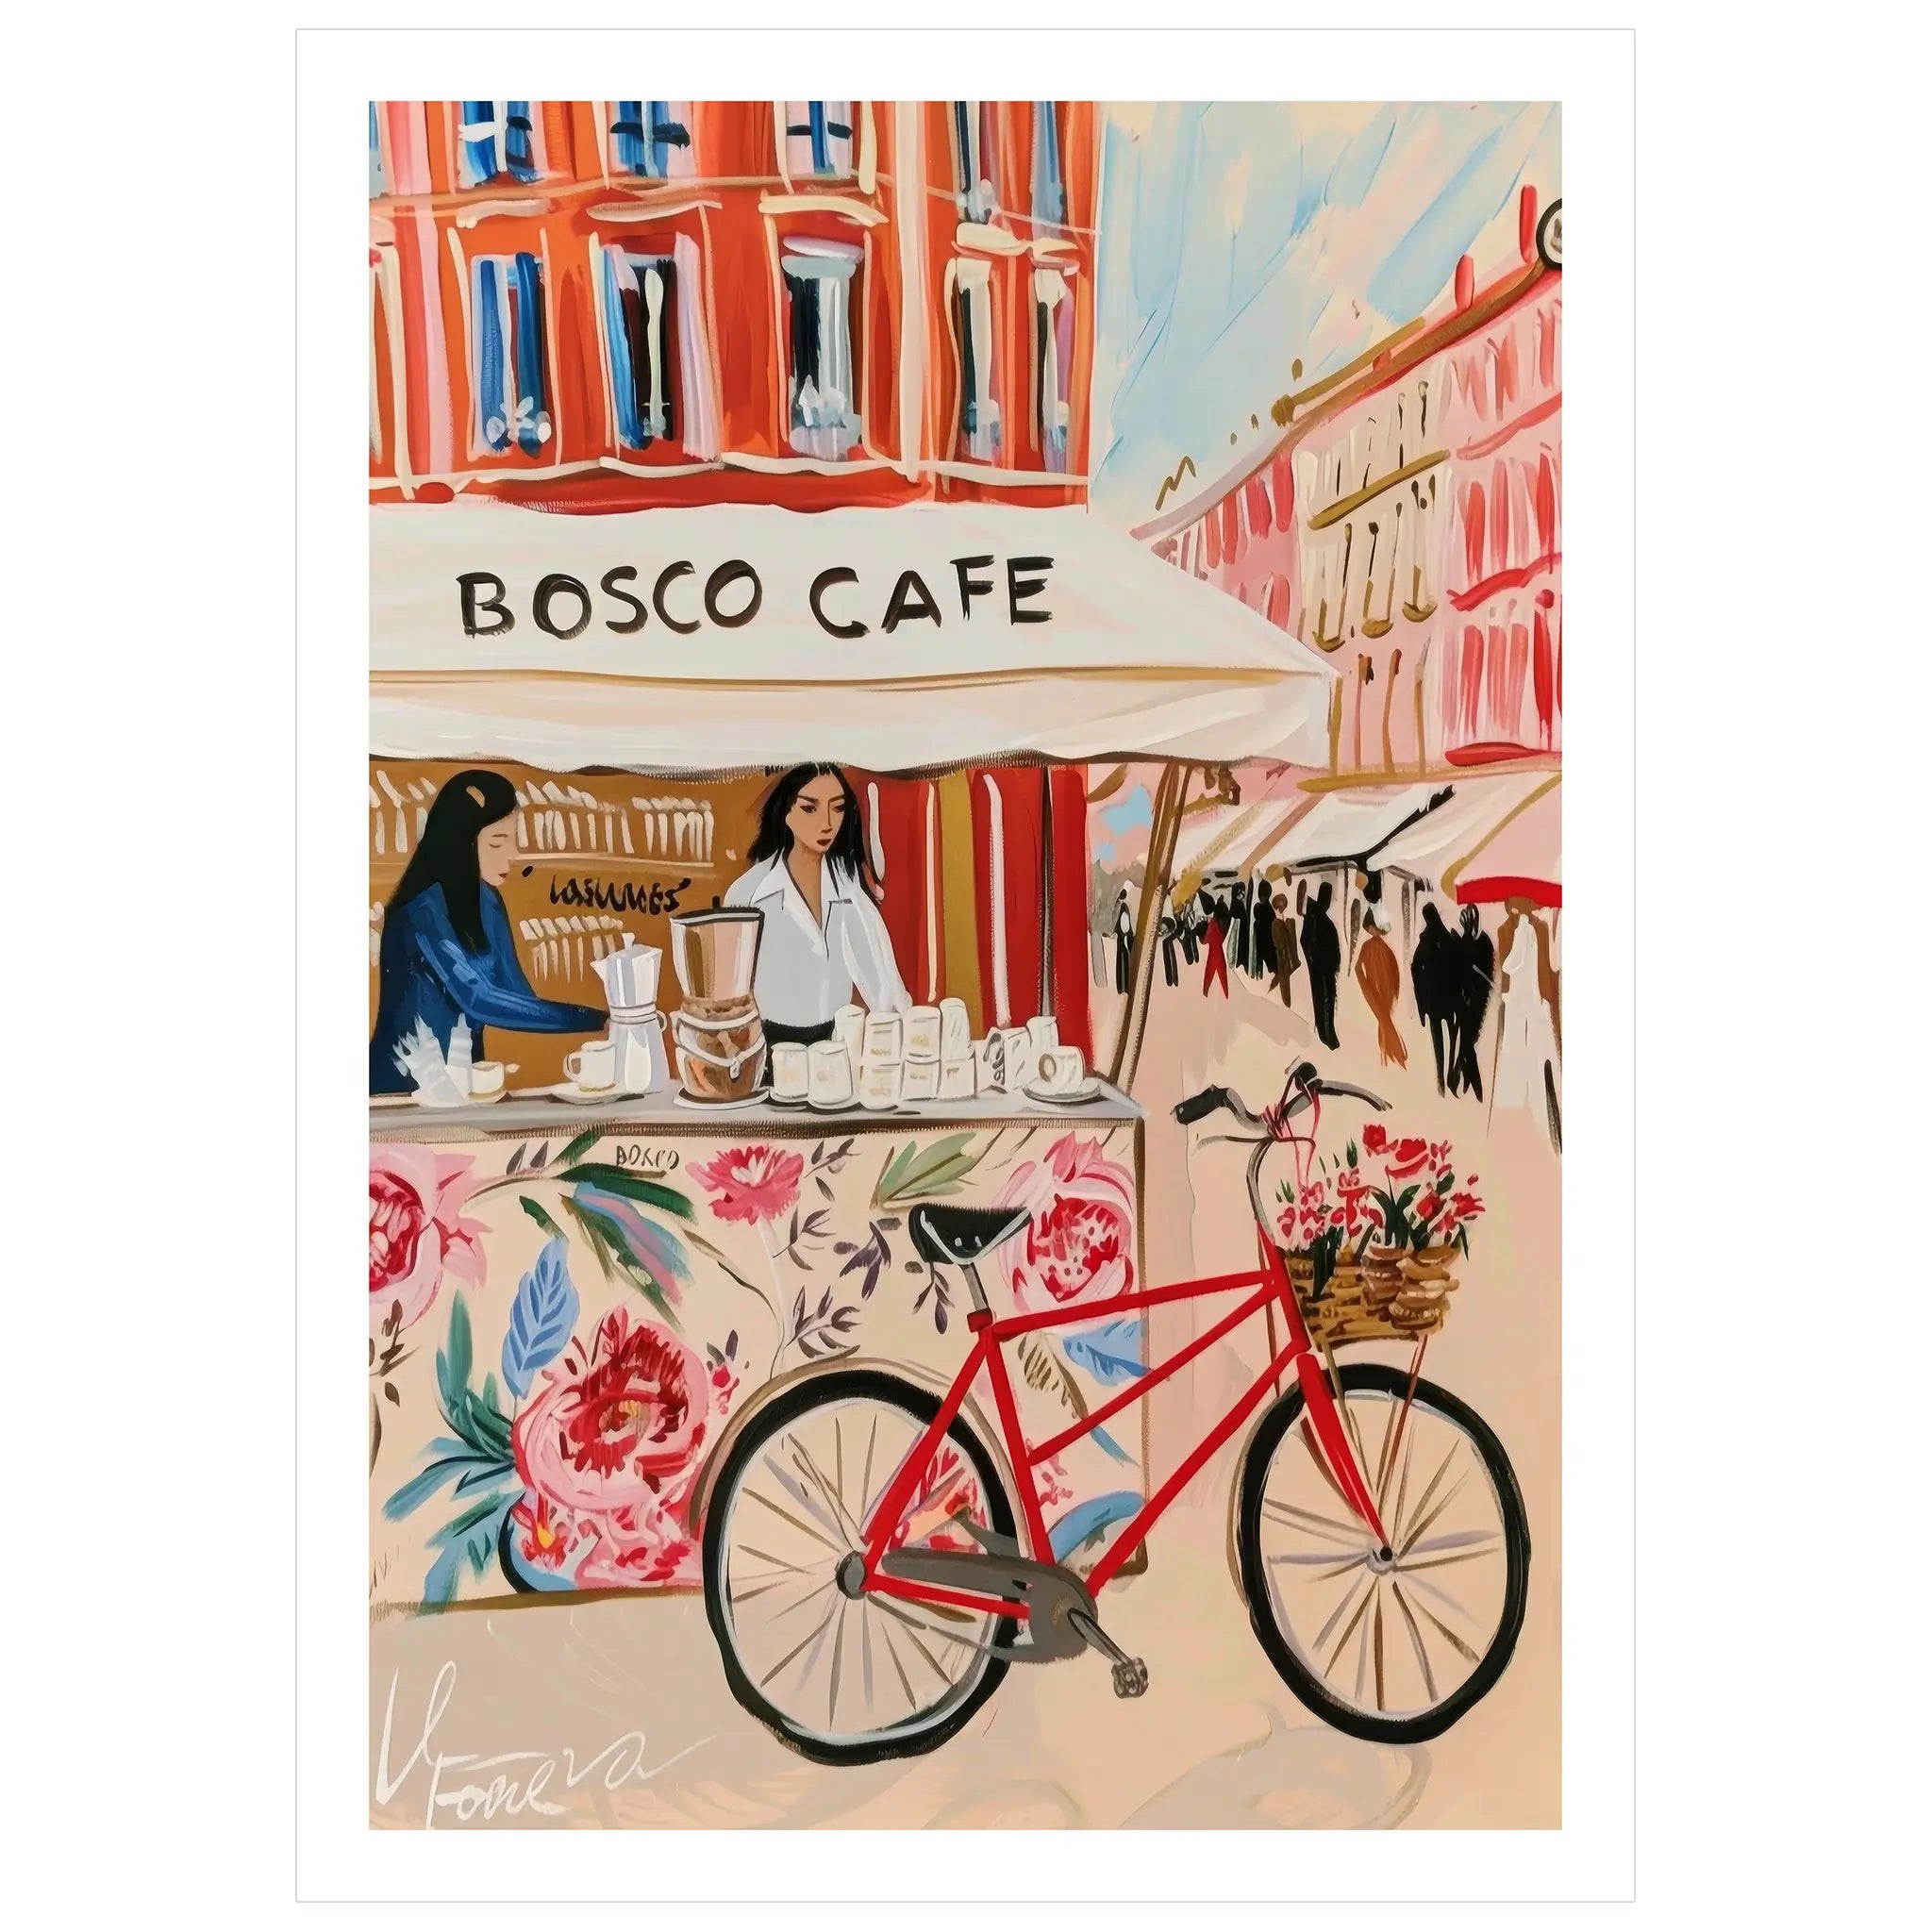 Bosco cafe